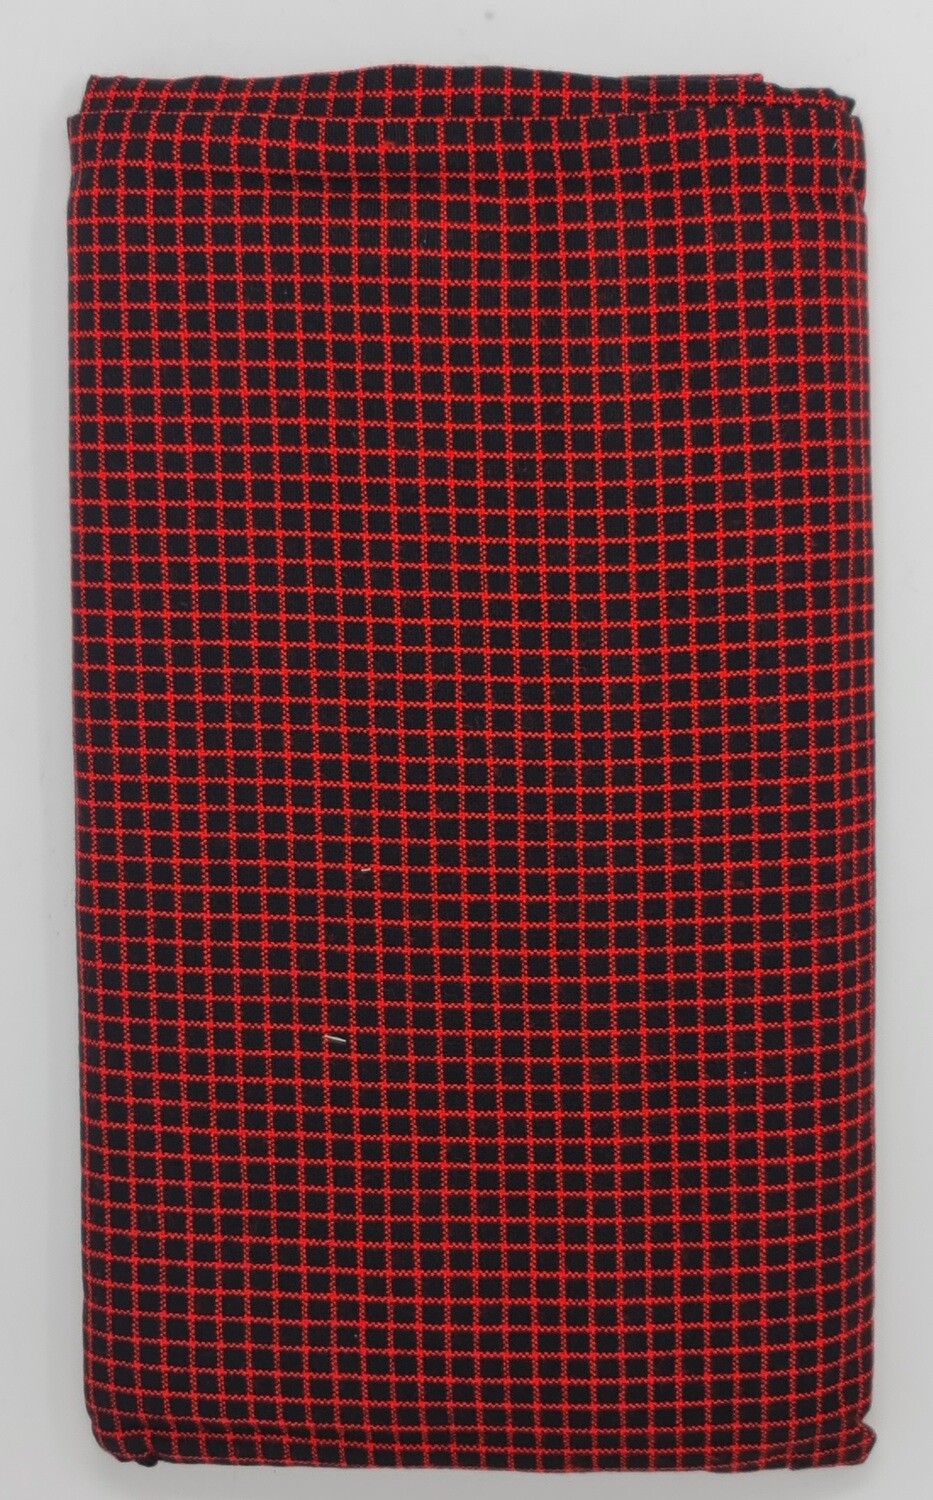 Masai Shuka Blanket - Vibox - Black and Red